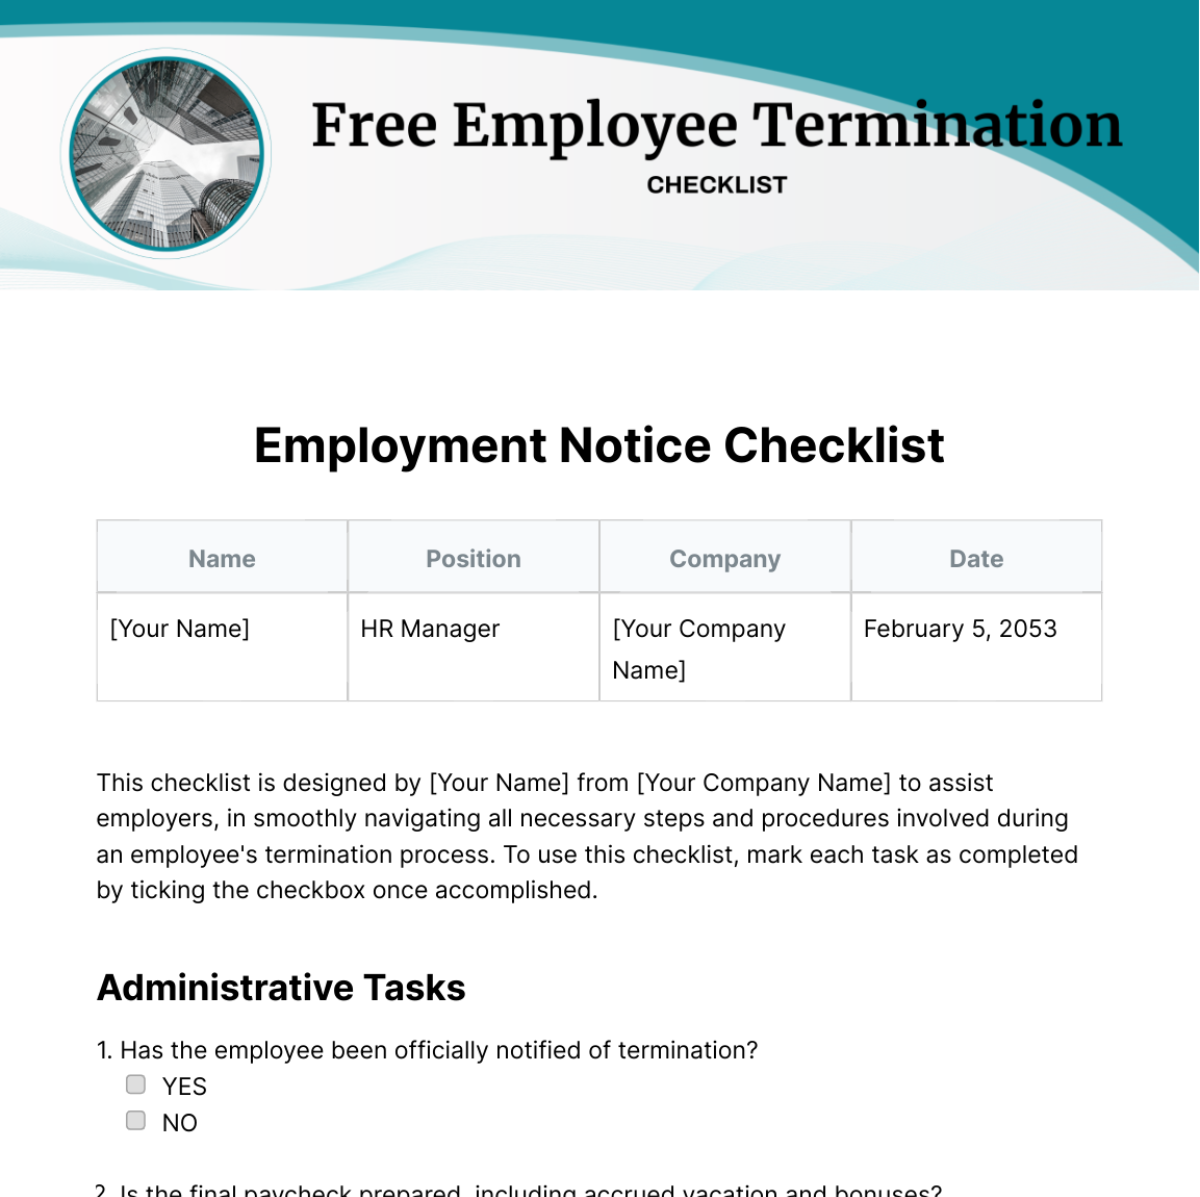 Free Employee Termination Checklist Template